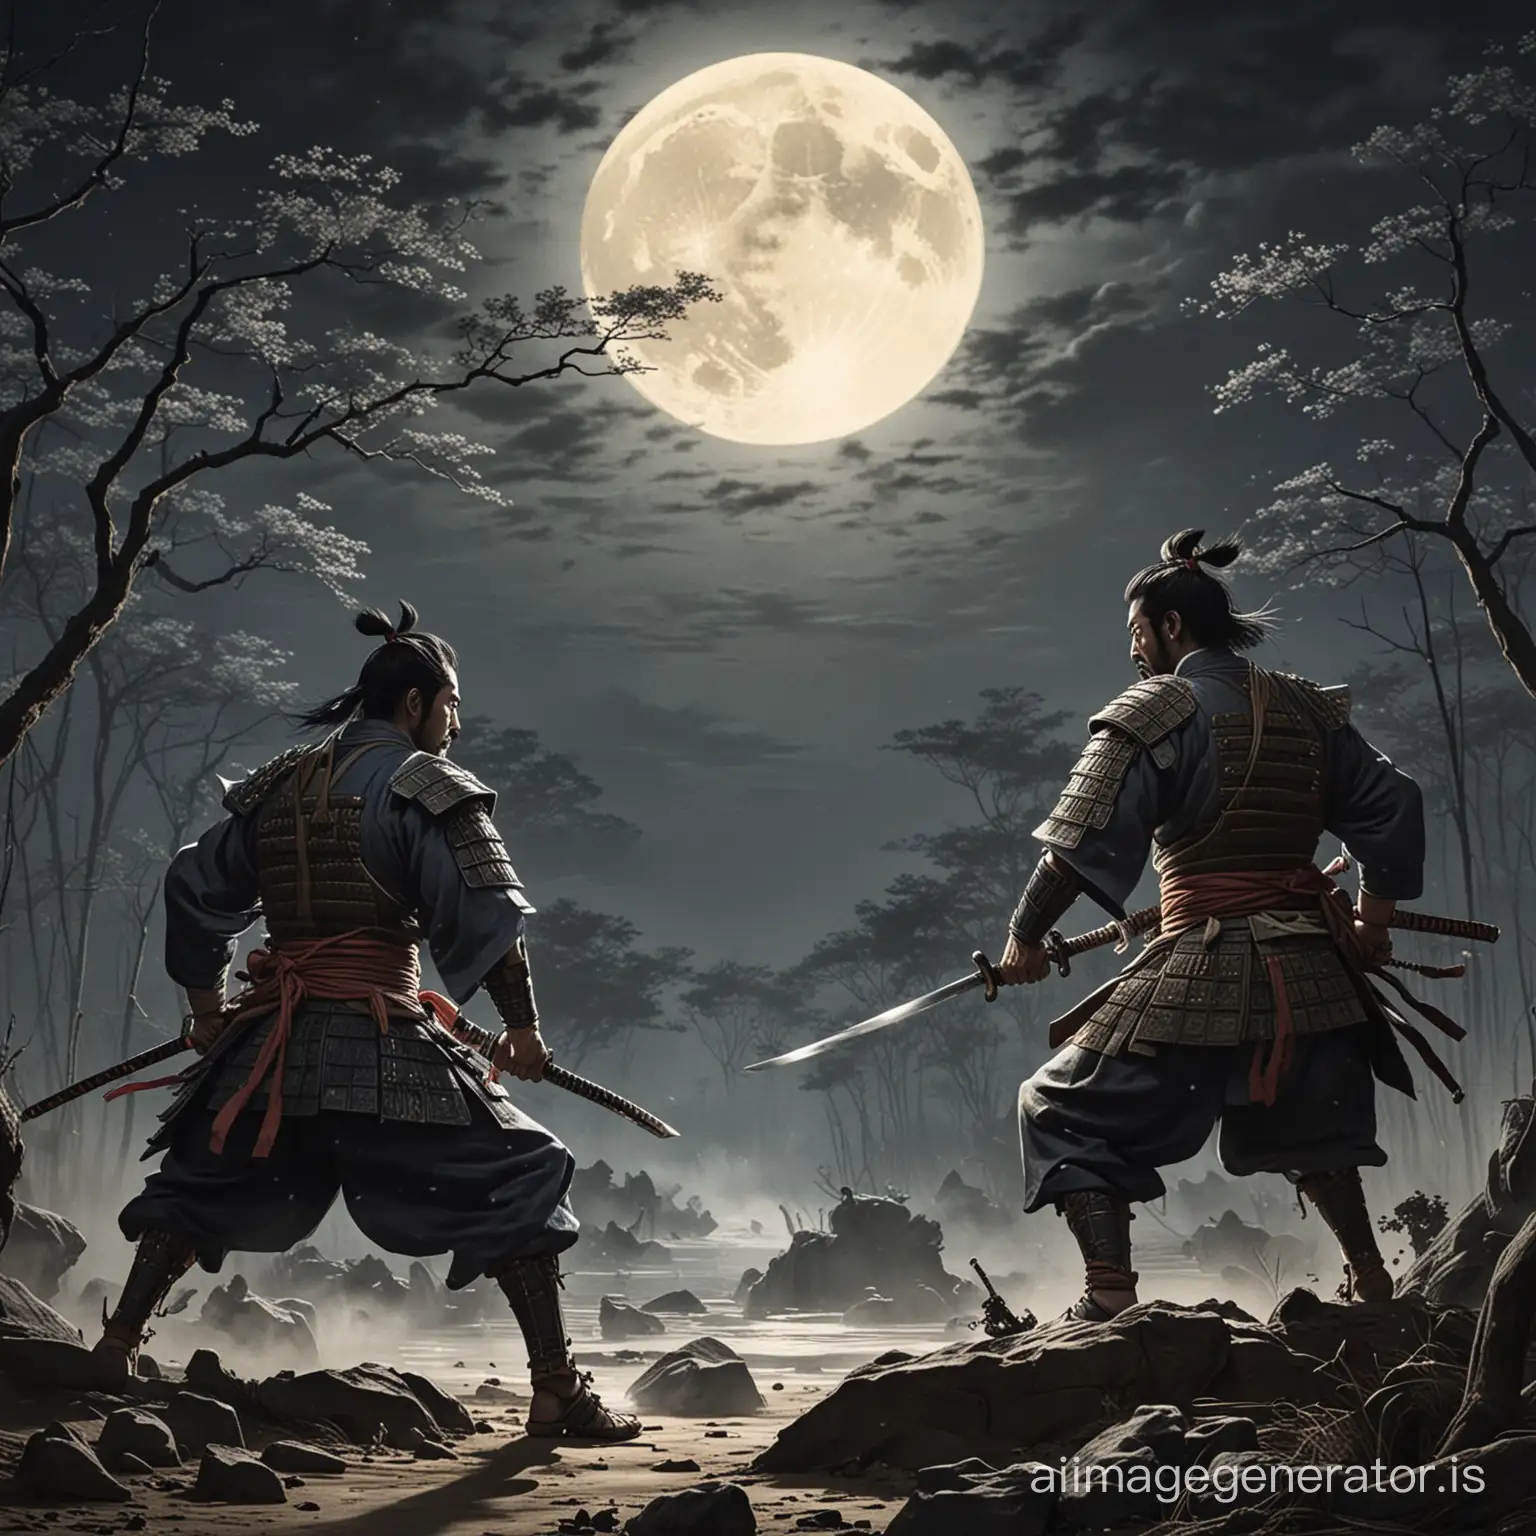 Moonlit-Duel-Intense-Samurai-Battle-Scene